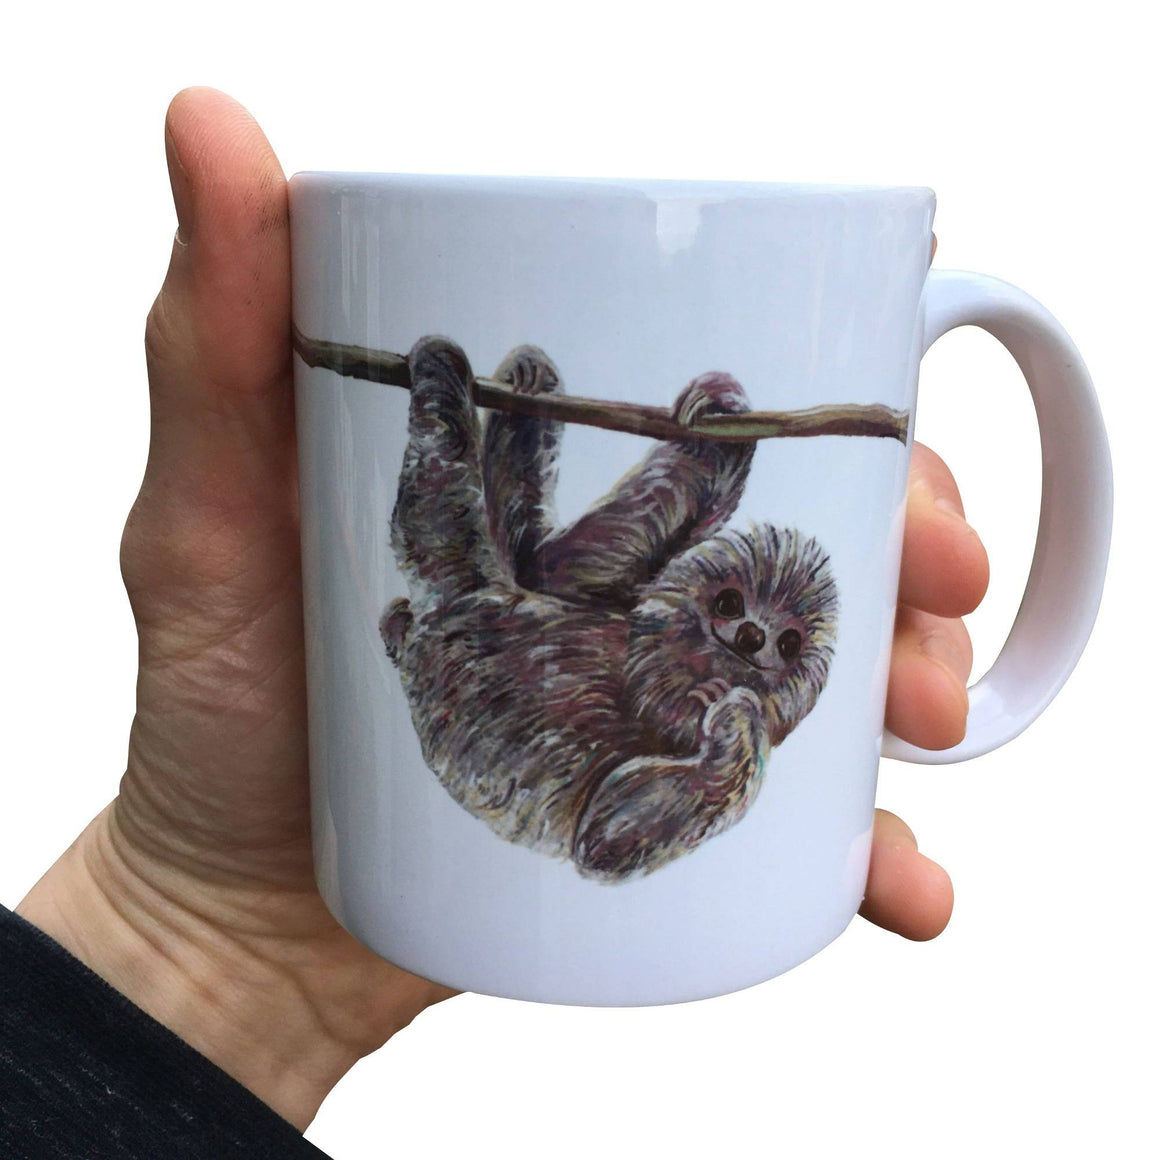 Painted Sloth Mug (Can be personalised)